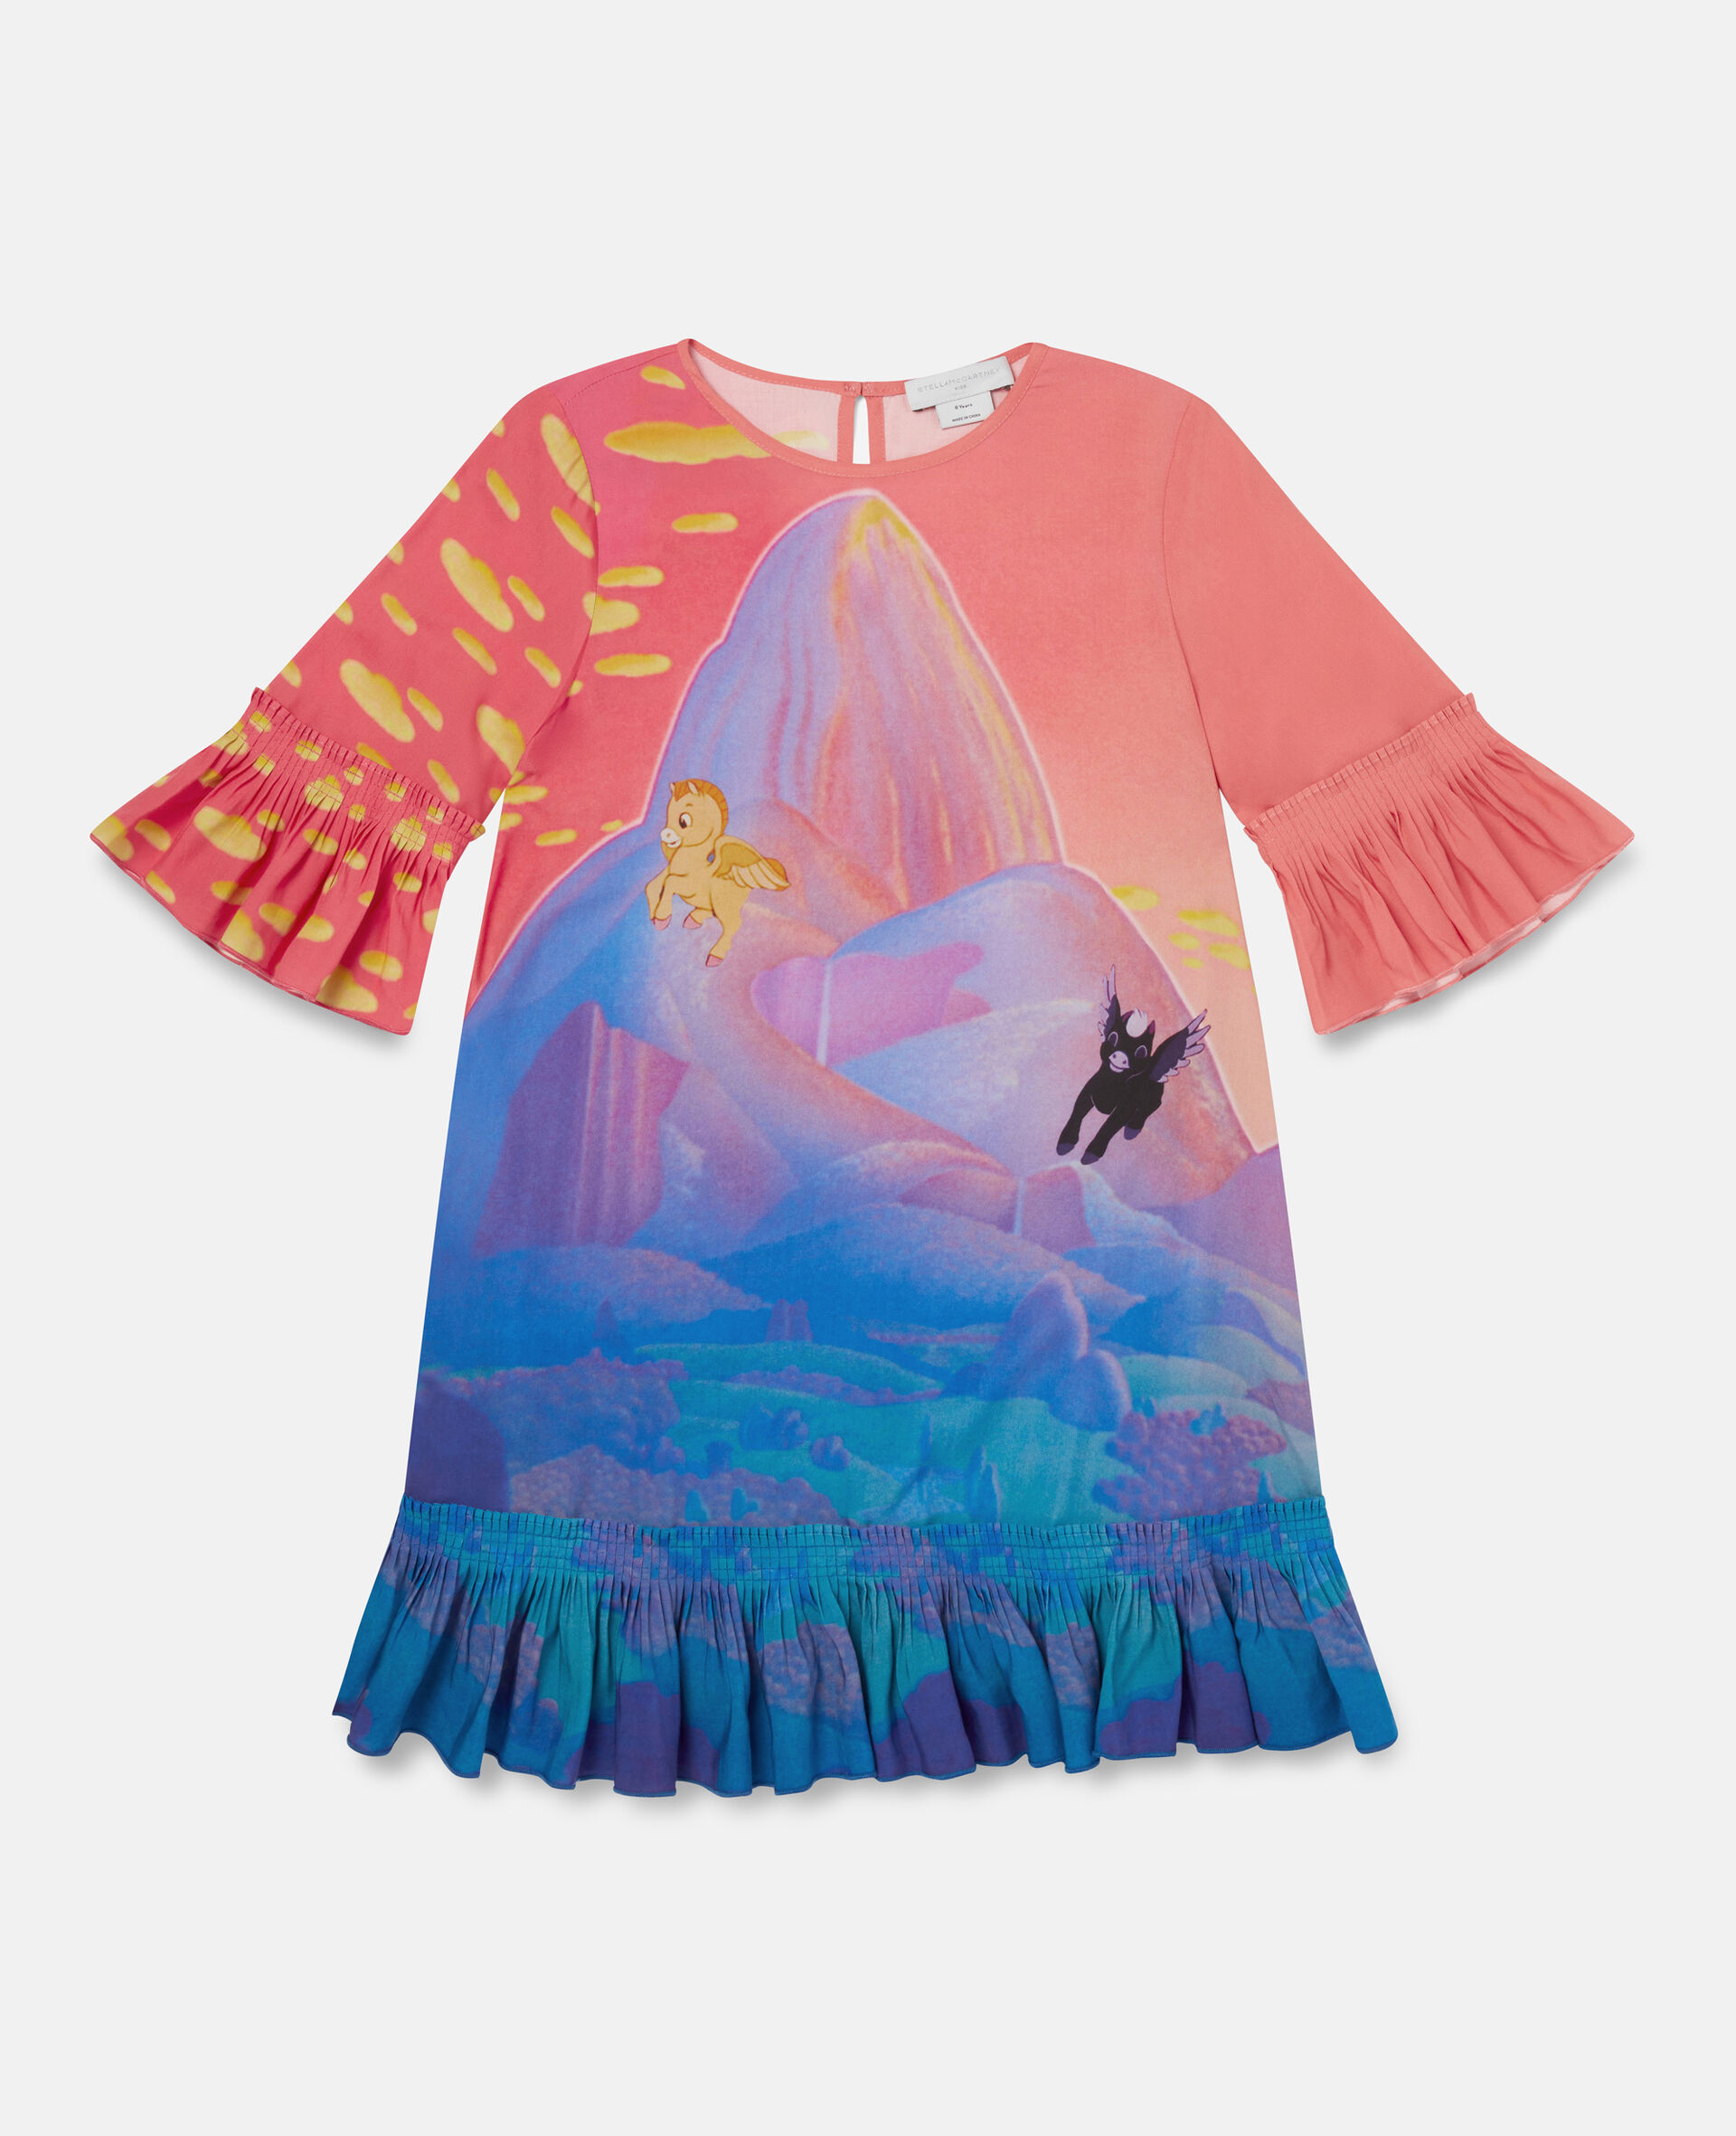 Fantasia Mount Olympus Ruffle Dress-Pink-large image number 0